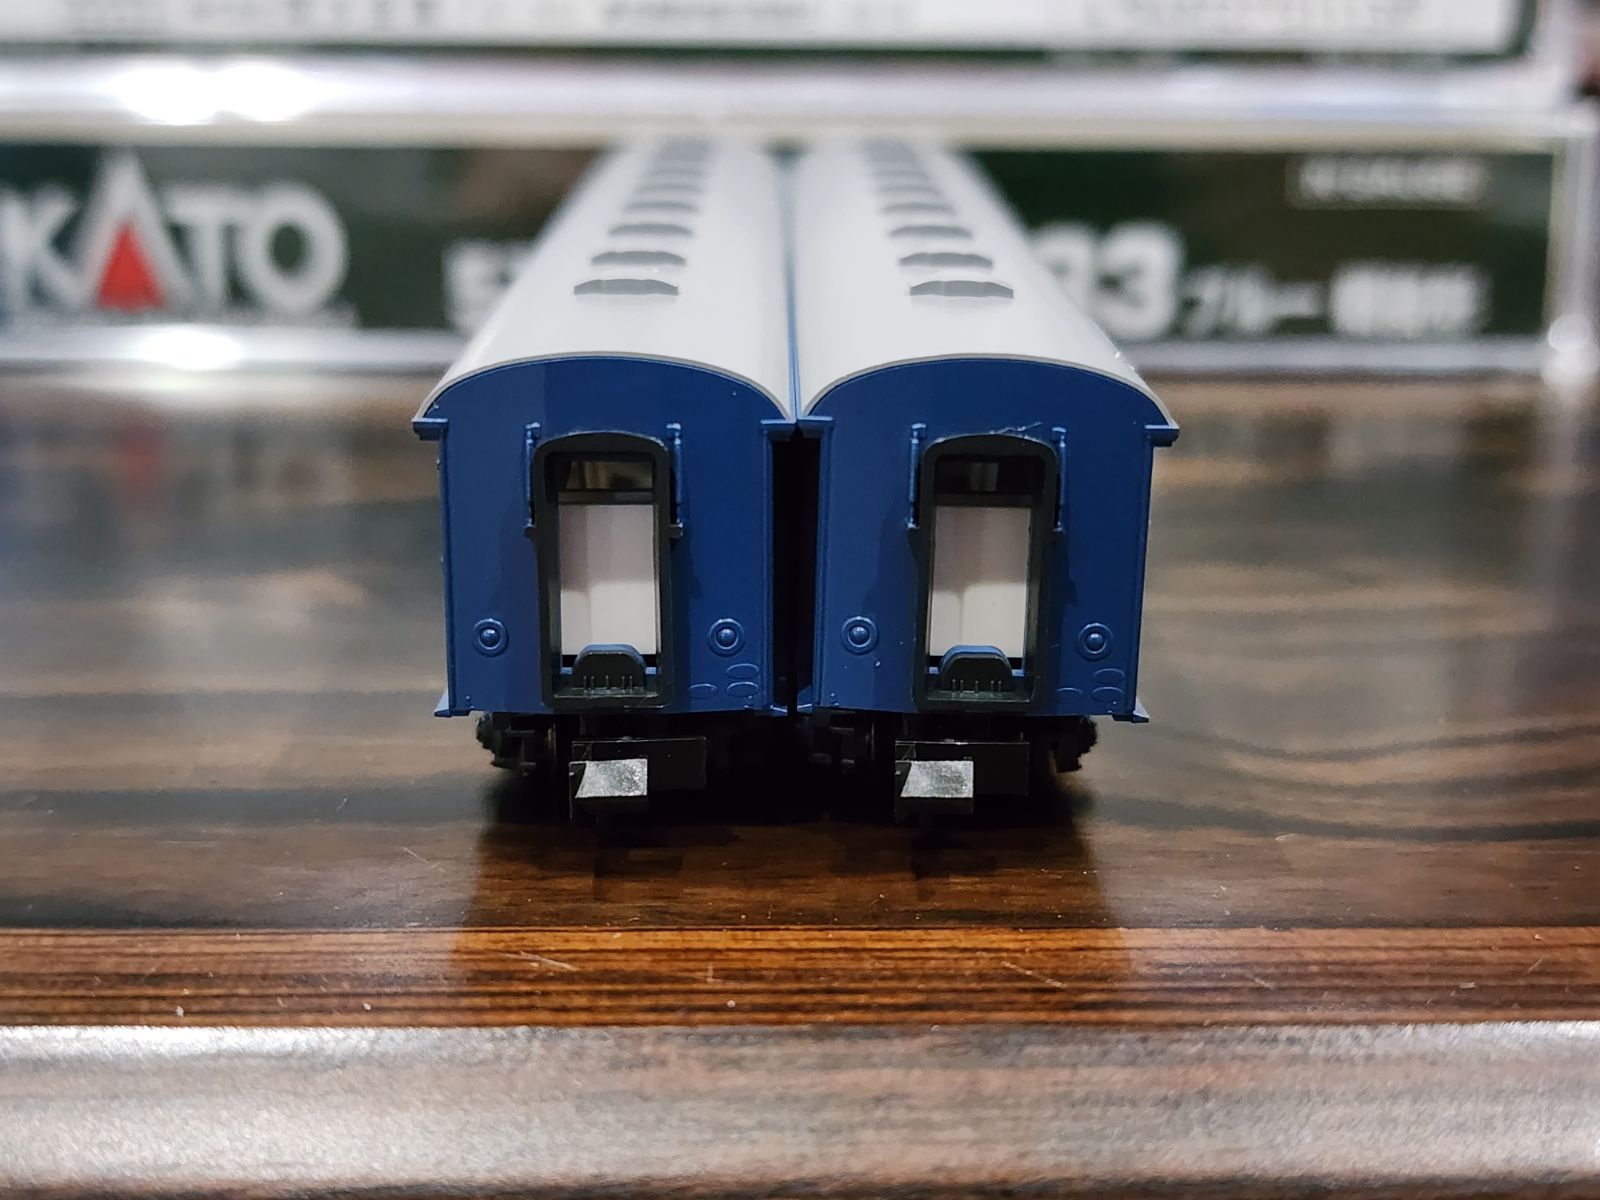 Nゲージ) KATO 5135-2 「オハ47」2両 - 鉄道模型